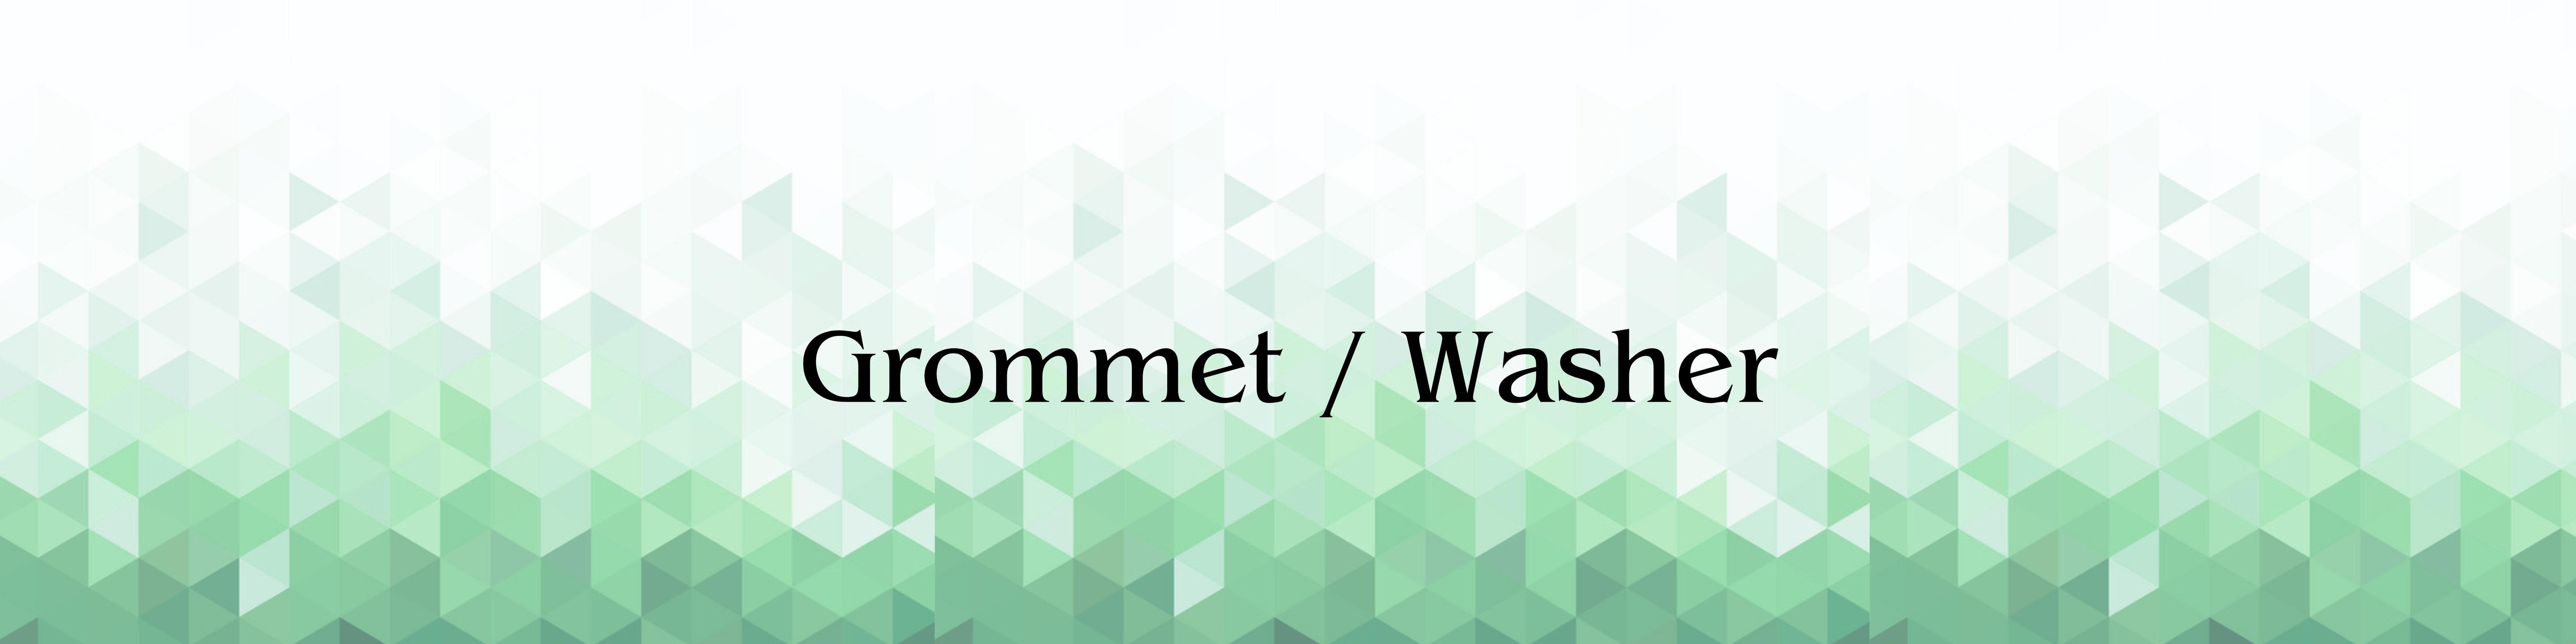 GROMMET/WASHER